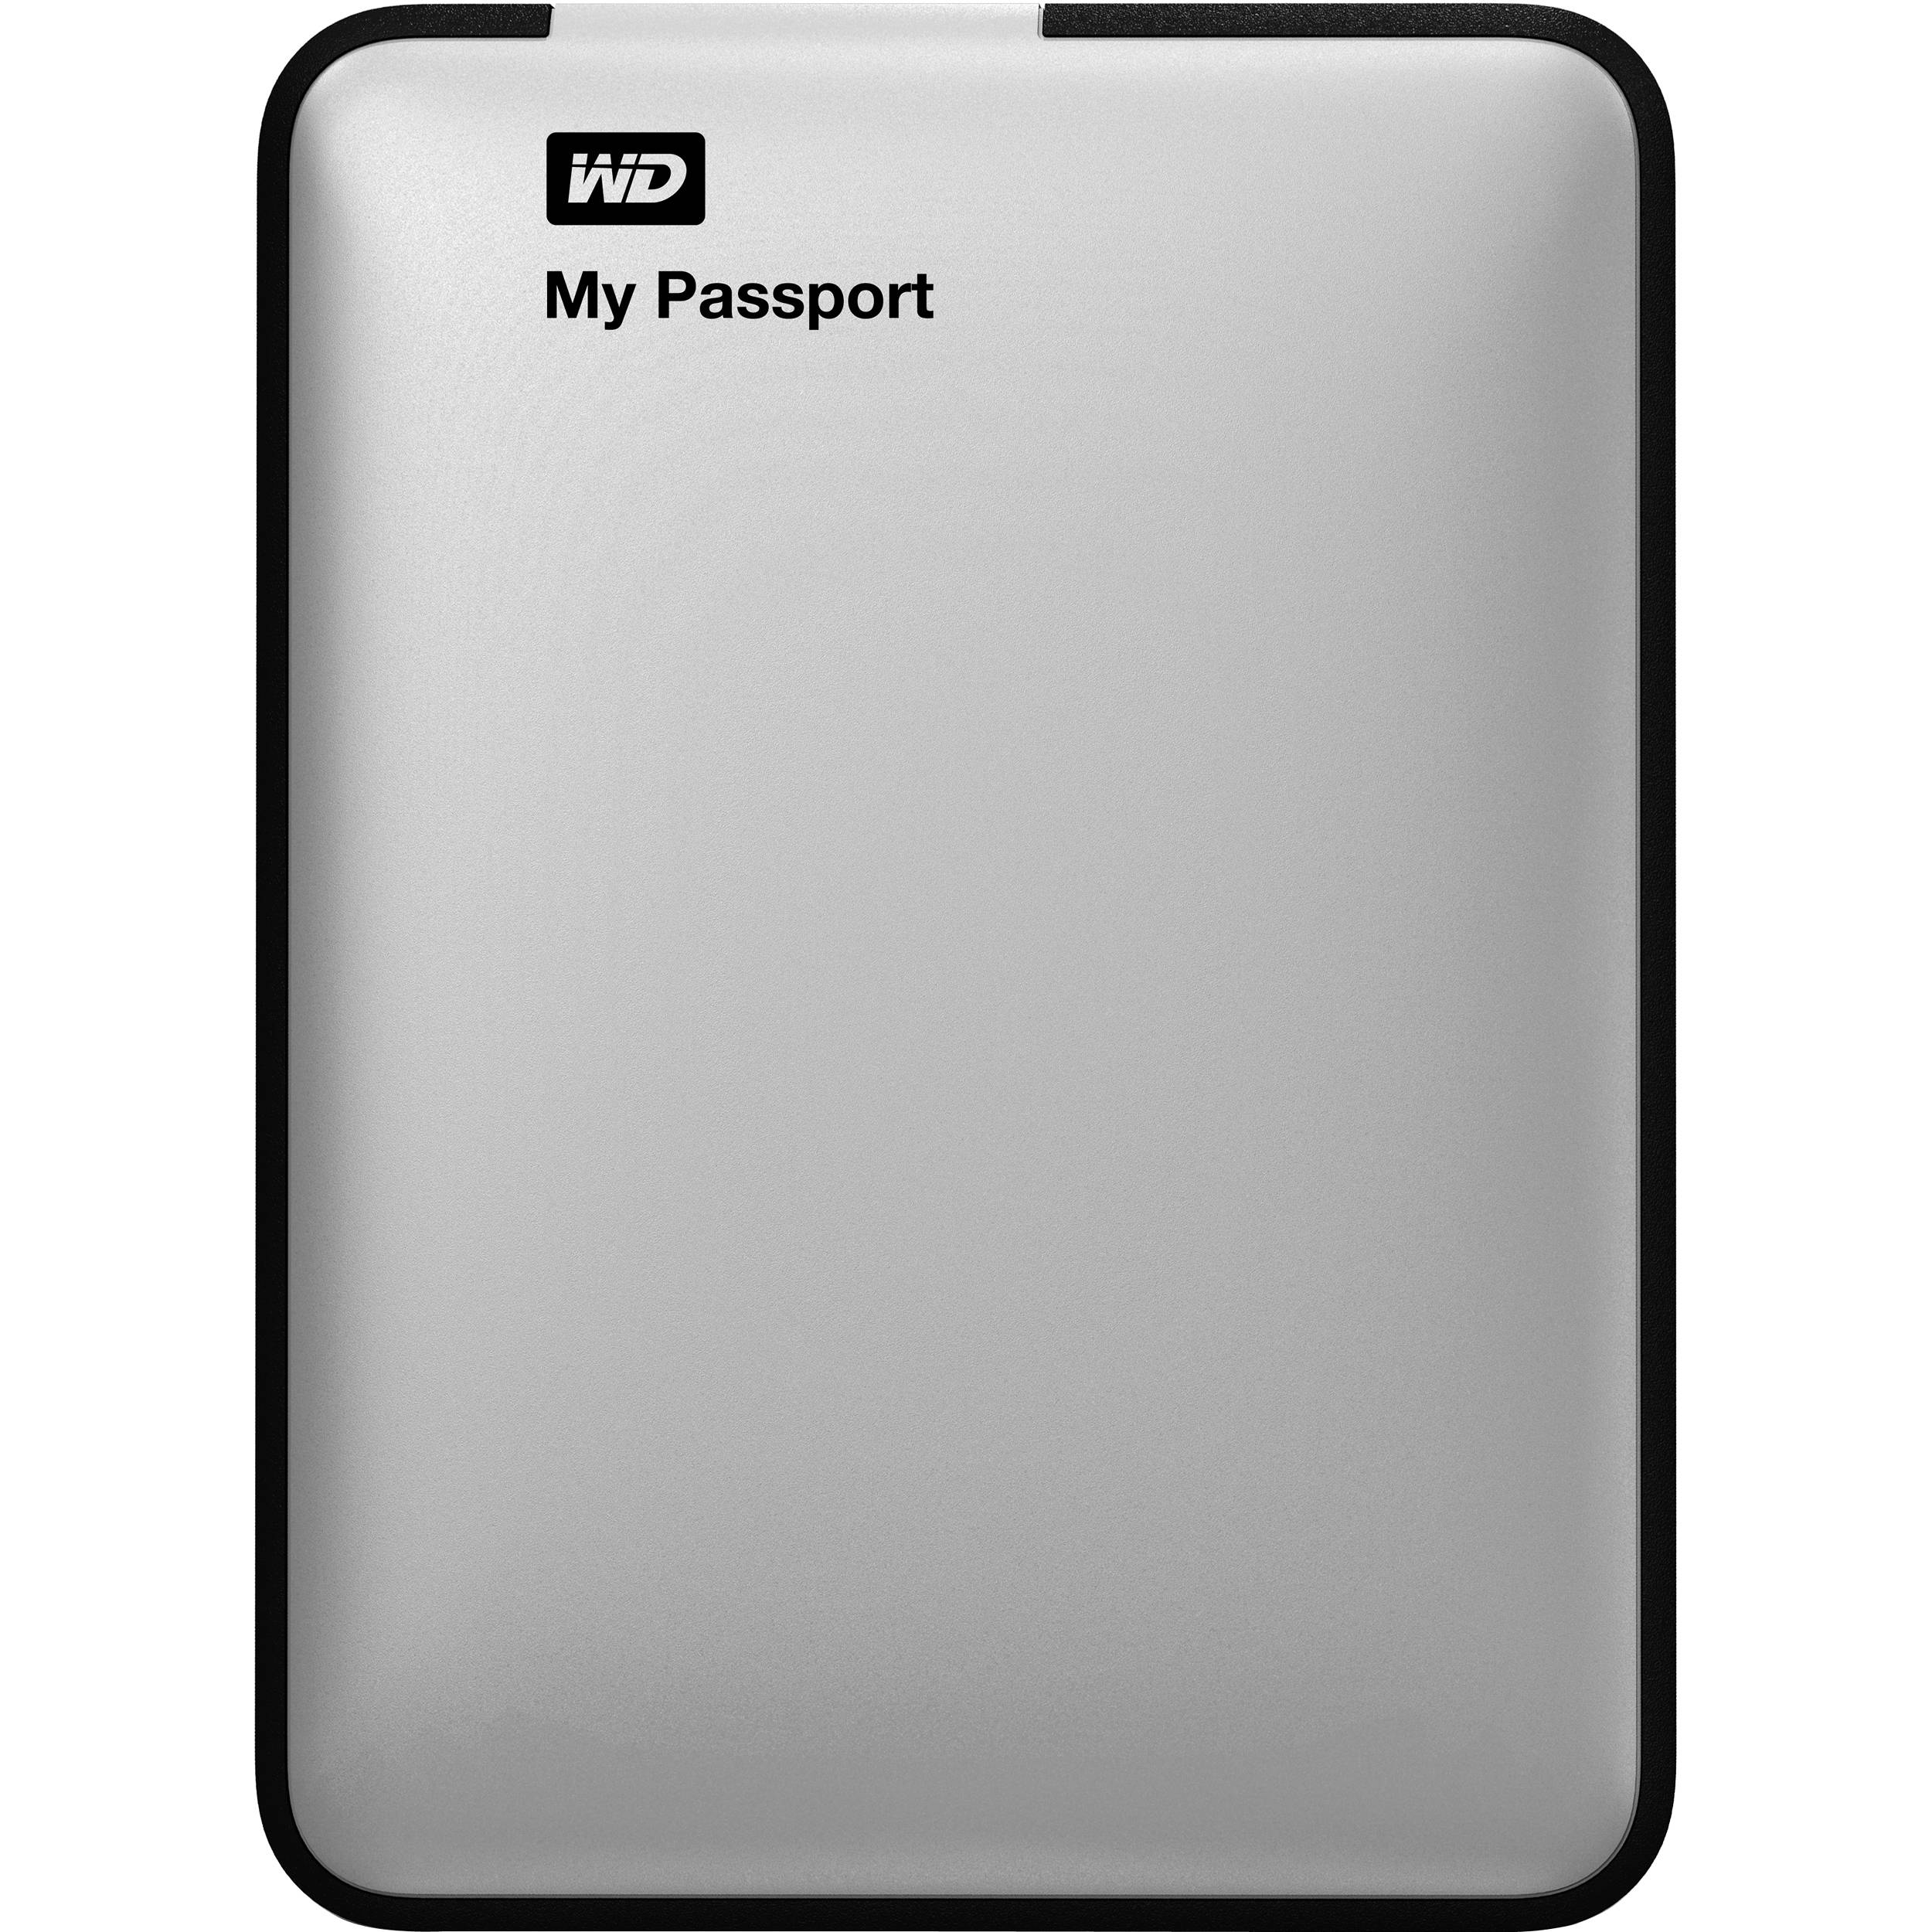 format passport hard drive for mac